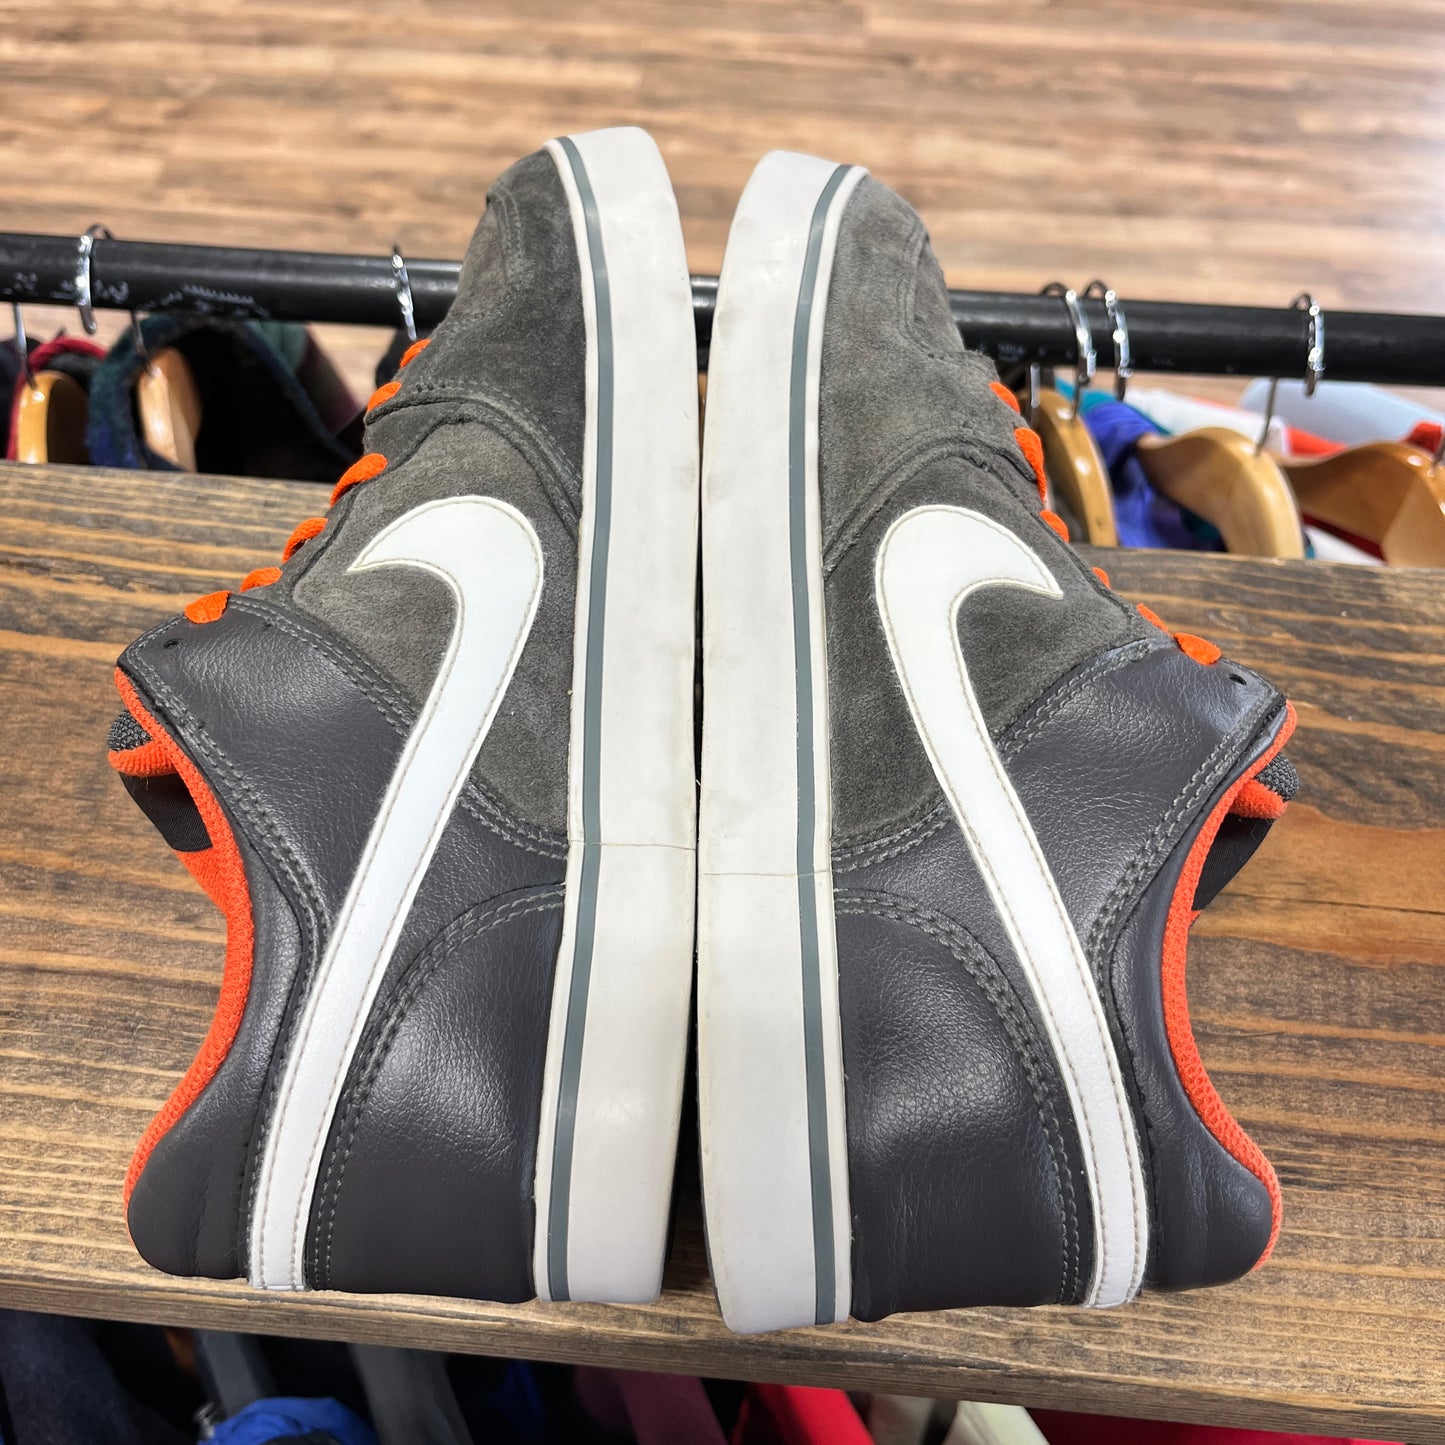 Nike 6.0 Skate Shoe 'Grey Suede' Size 9